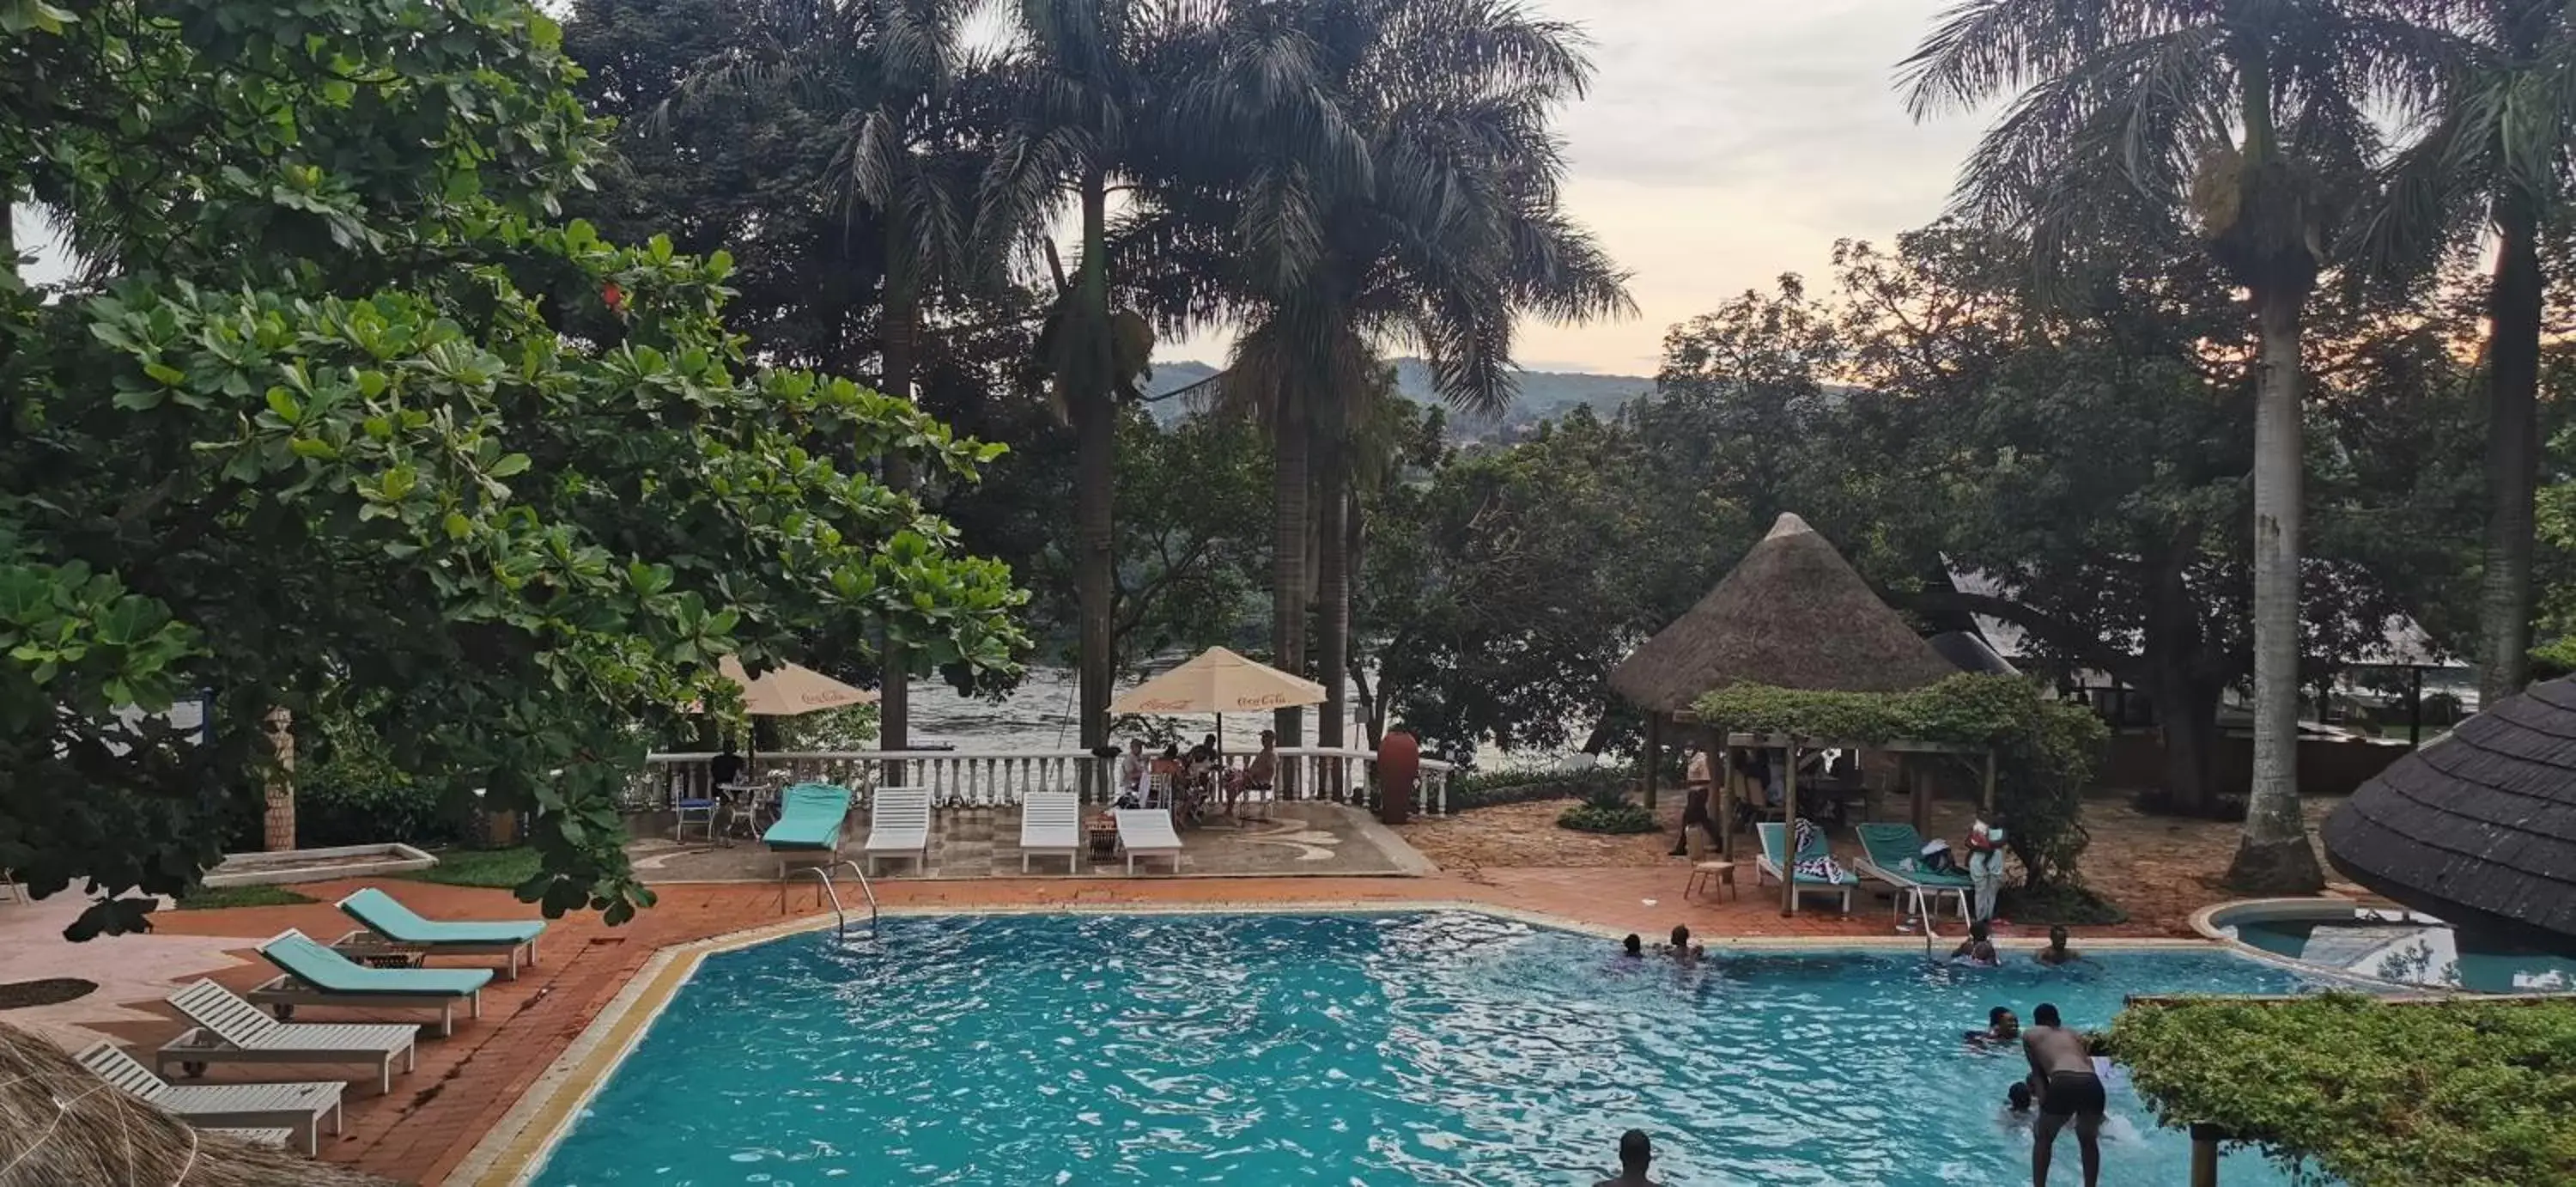 Swimming Pool in Jinja Nile Resort